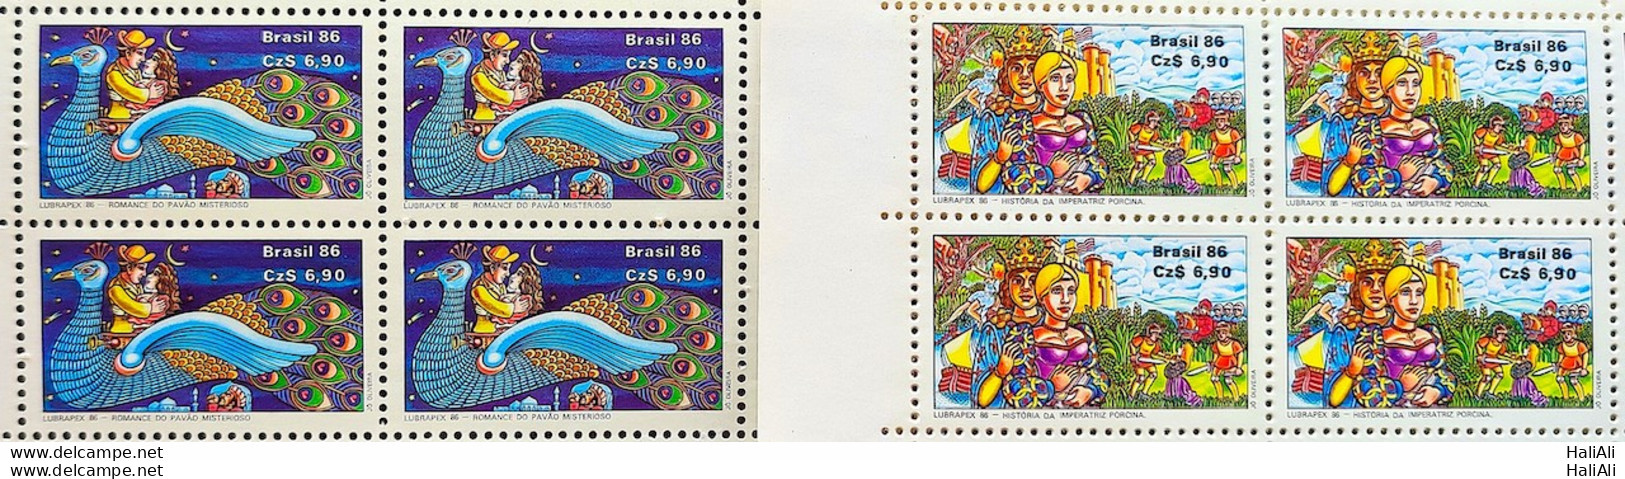 C 1534 Brazil Stamp Lubrapex Philately Postal Service 1986 Block Of 4 Complete Series - Unused Stamps